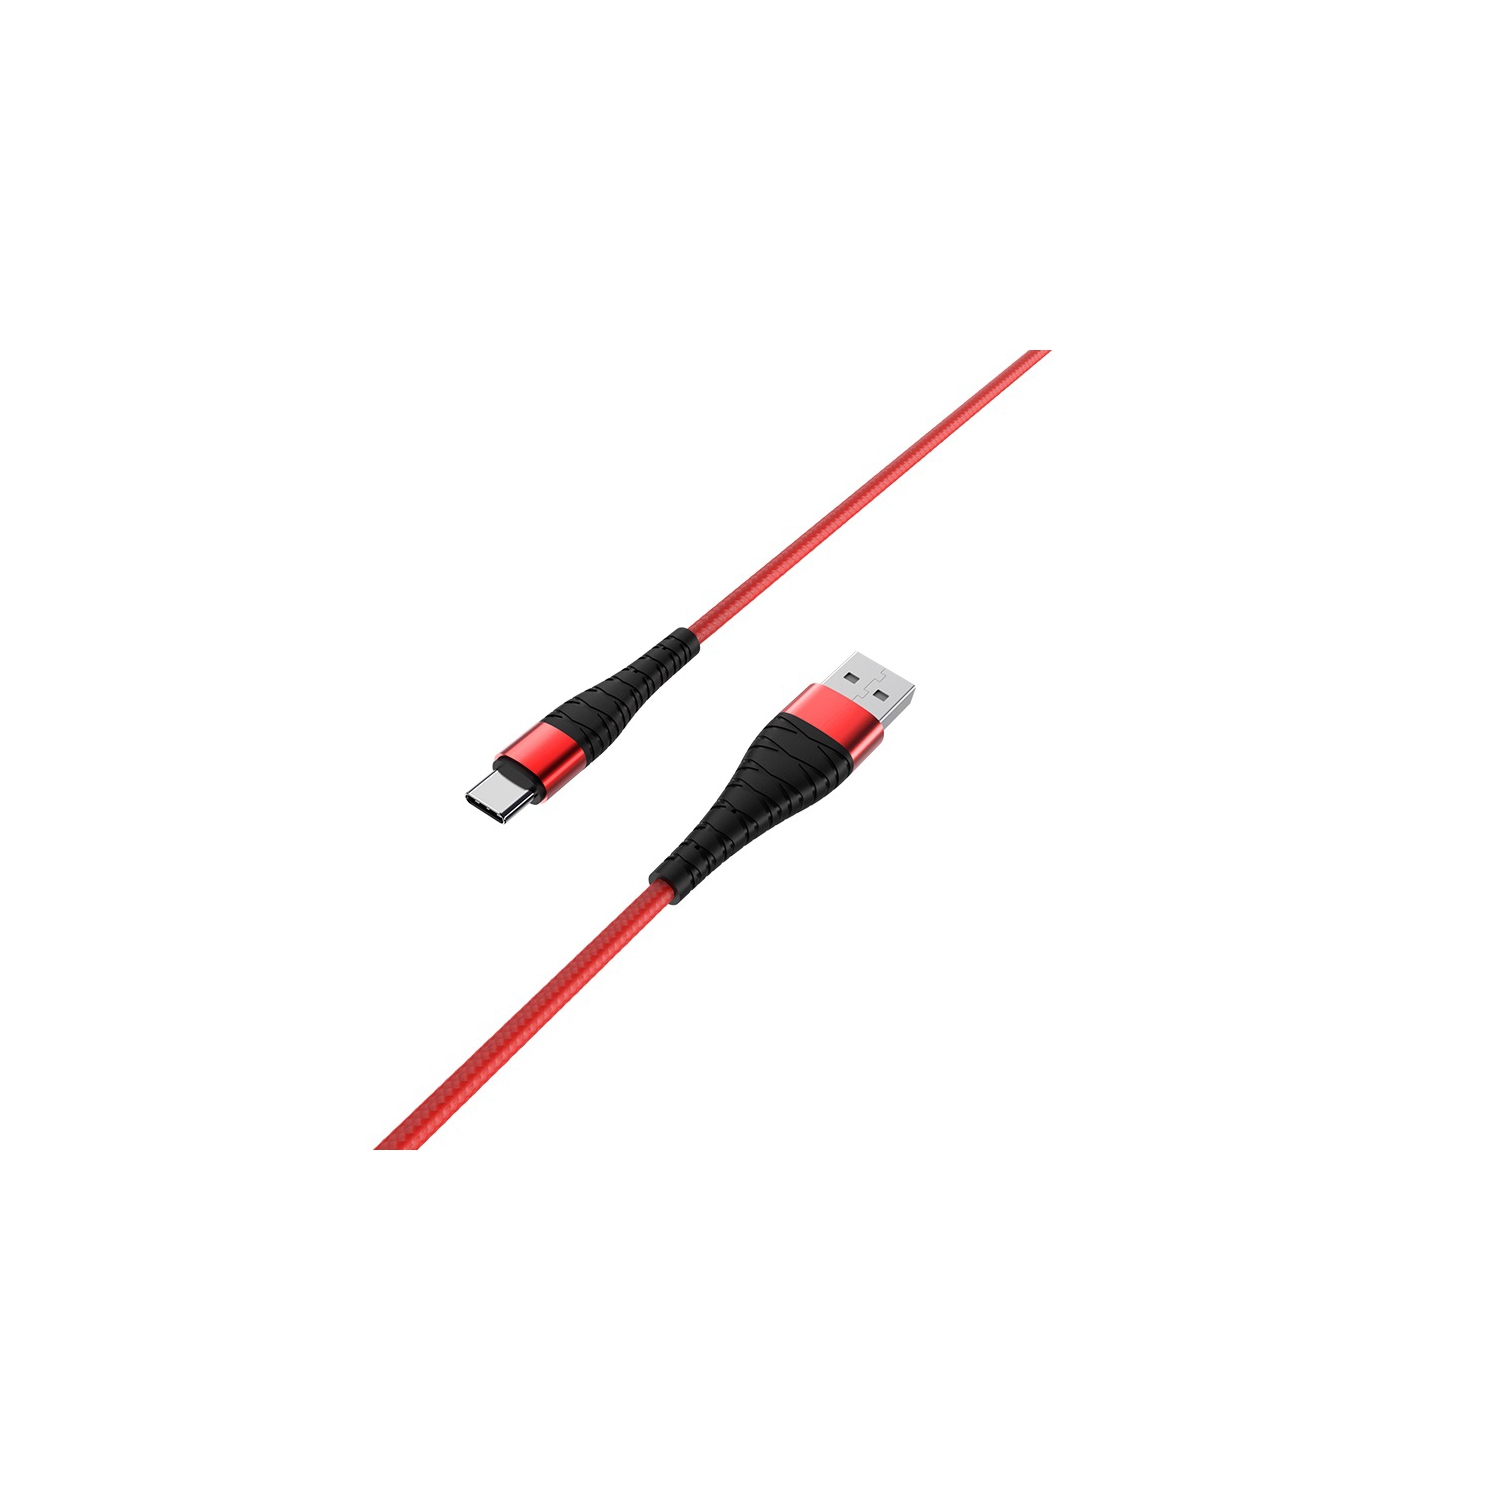 【2 Packs】 1M/3.3Ft Heavy Duty Nylon Braid USB Type C Fast Charging Data Cable Cord for Samsung Google LG Motorola Phones, Red